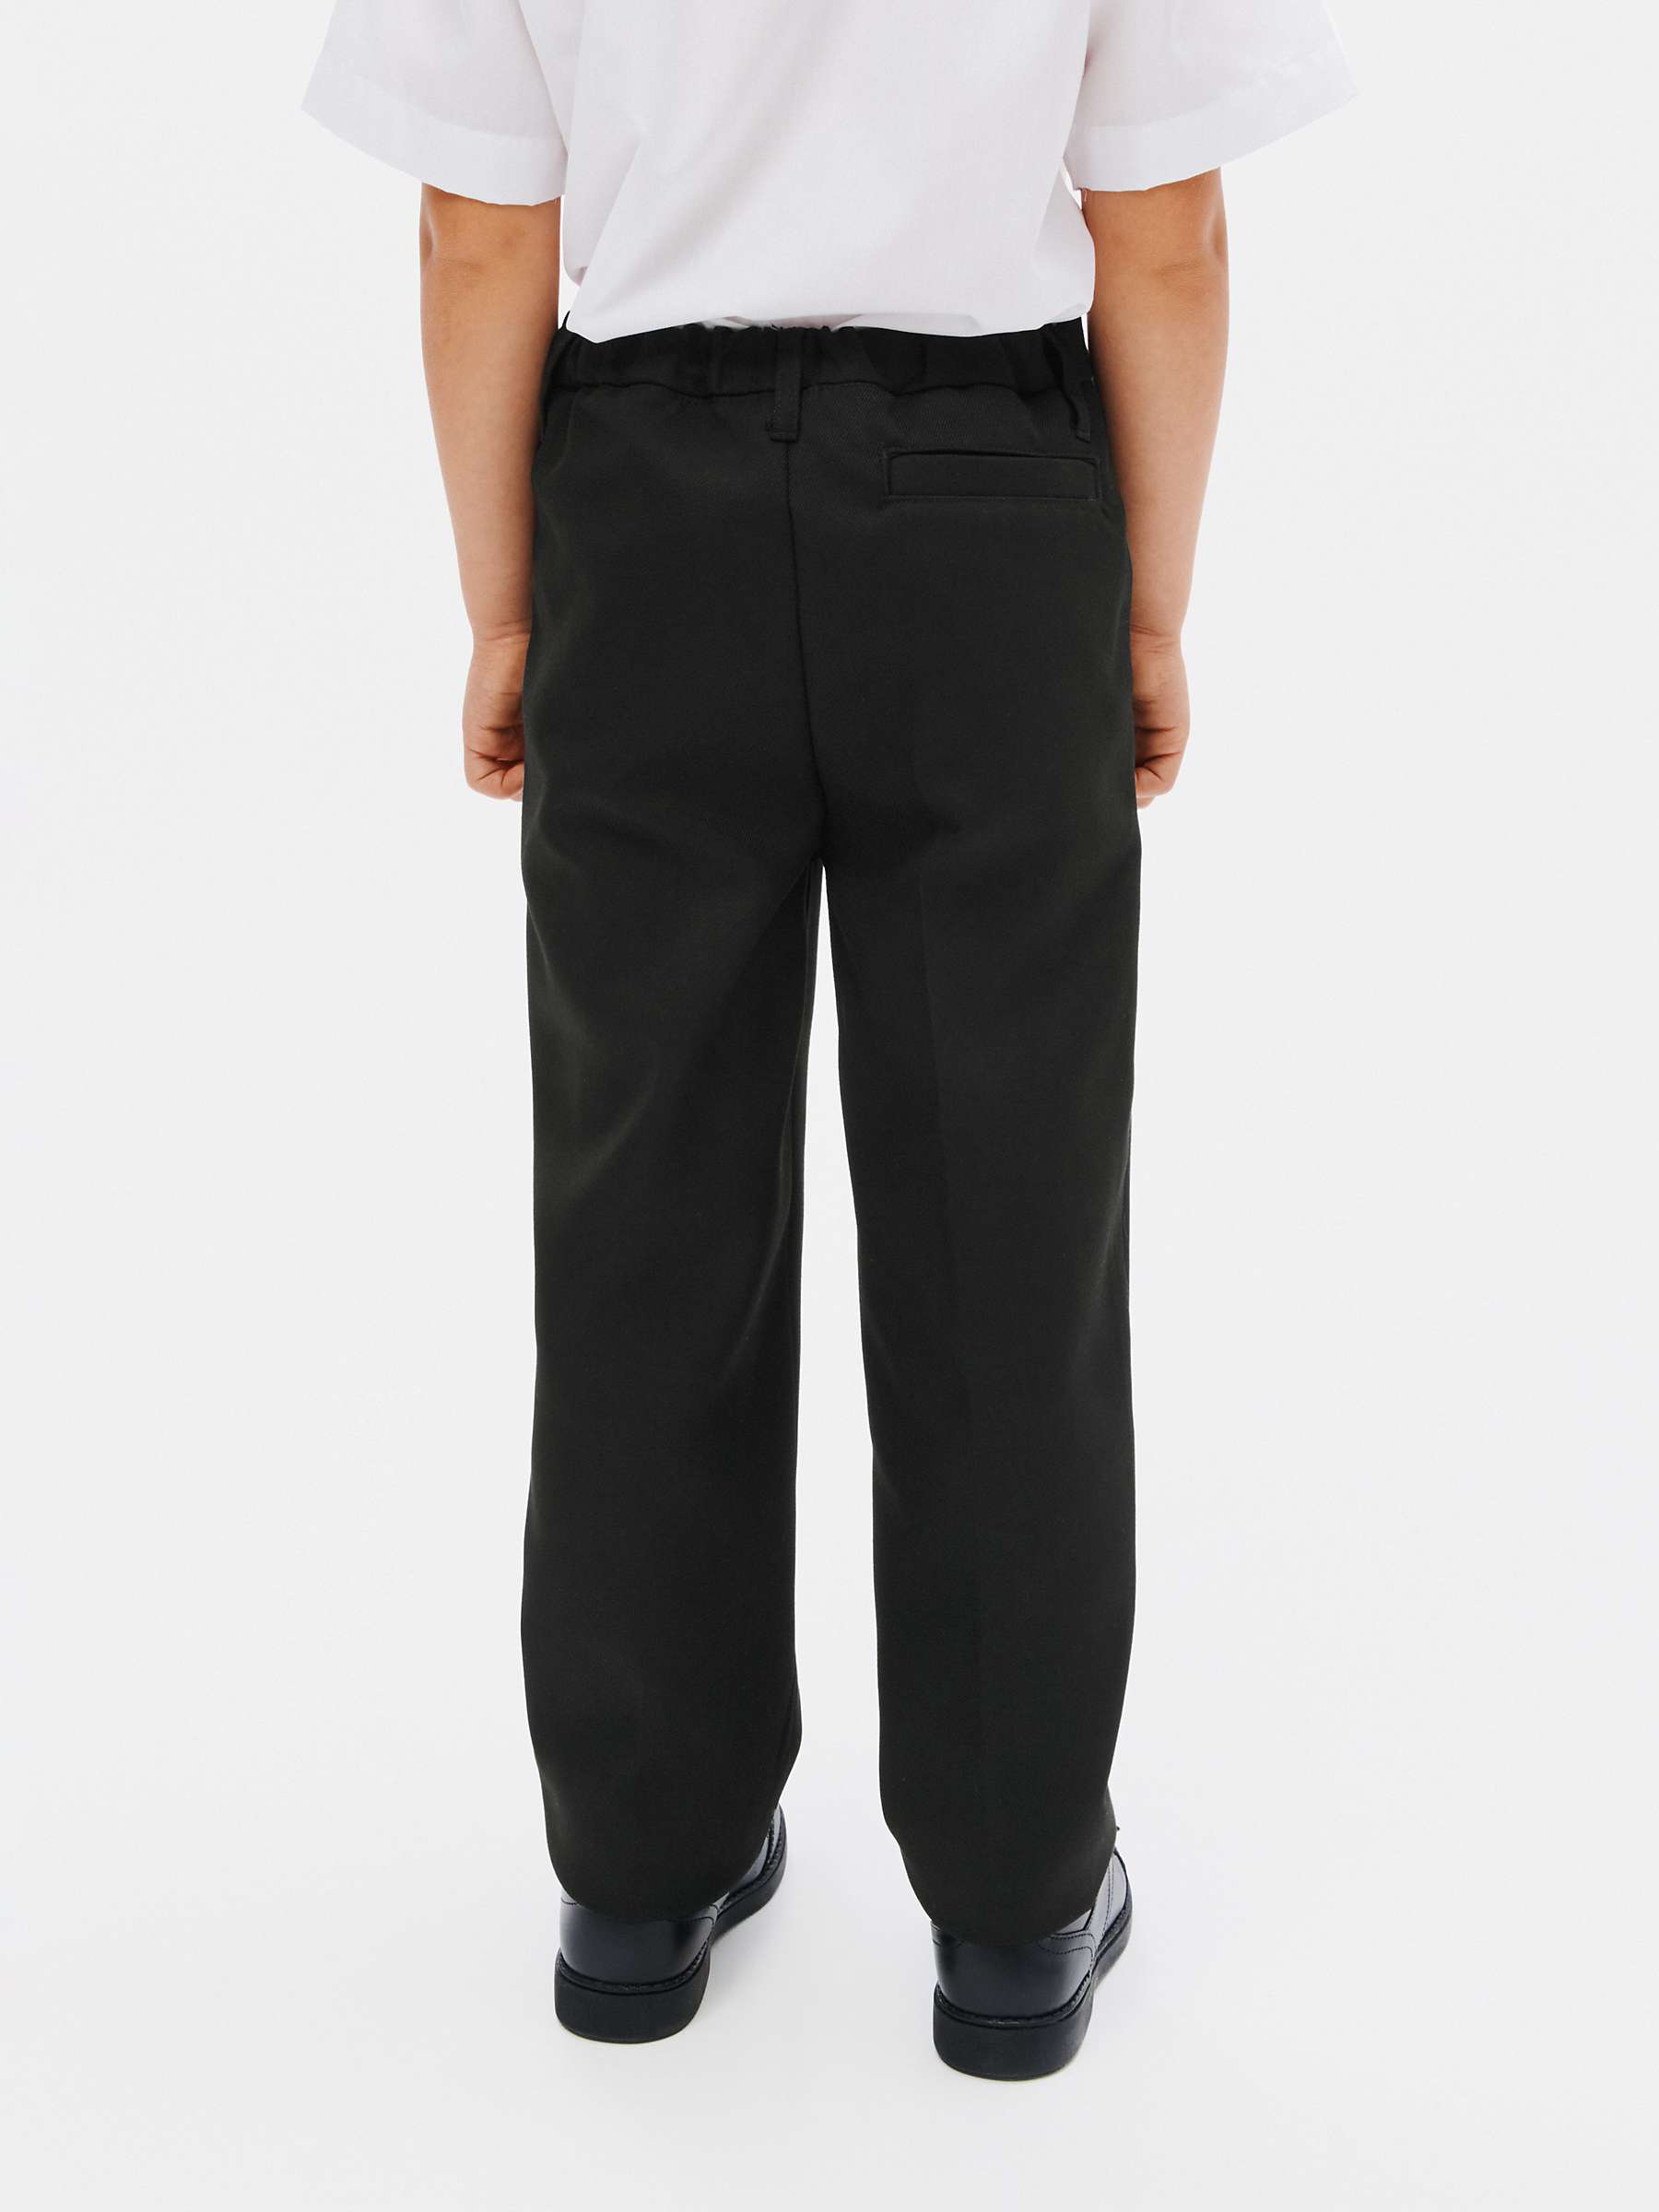 John Lewis Boys' Regular Fit Adjustable Waist School Trousers, Black at ...